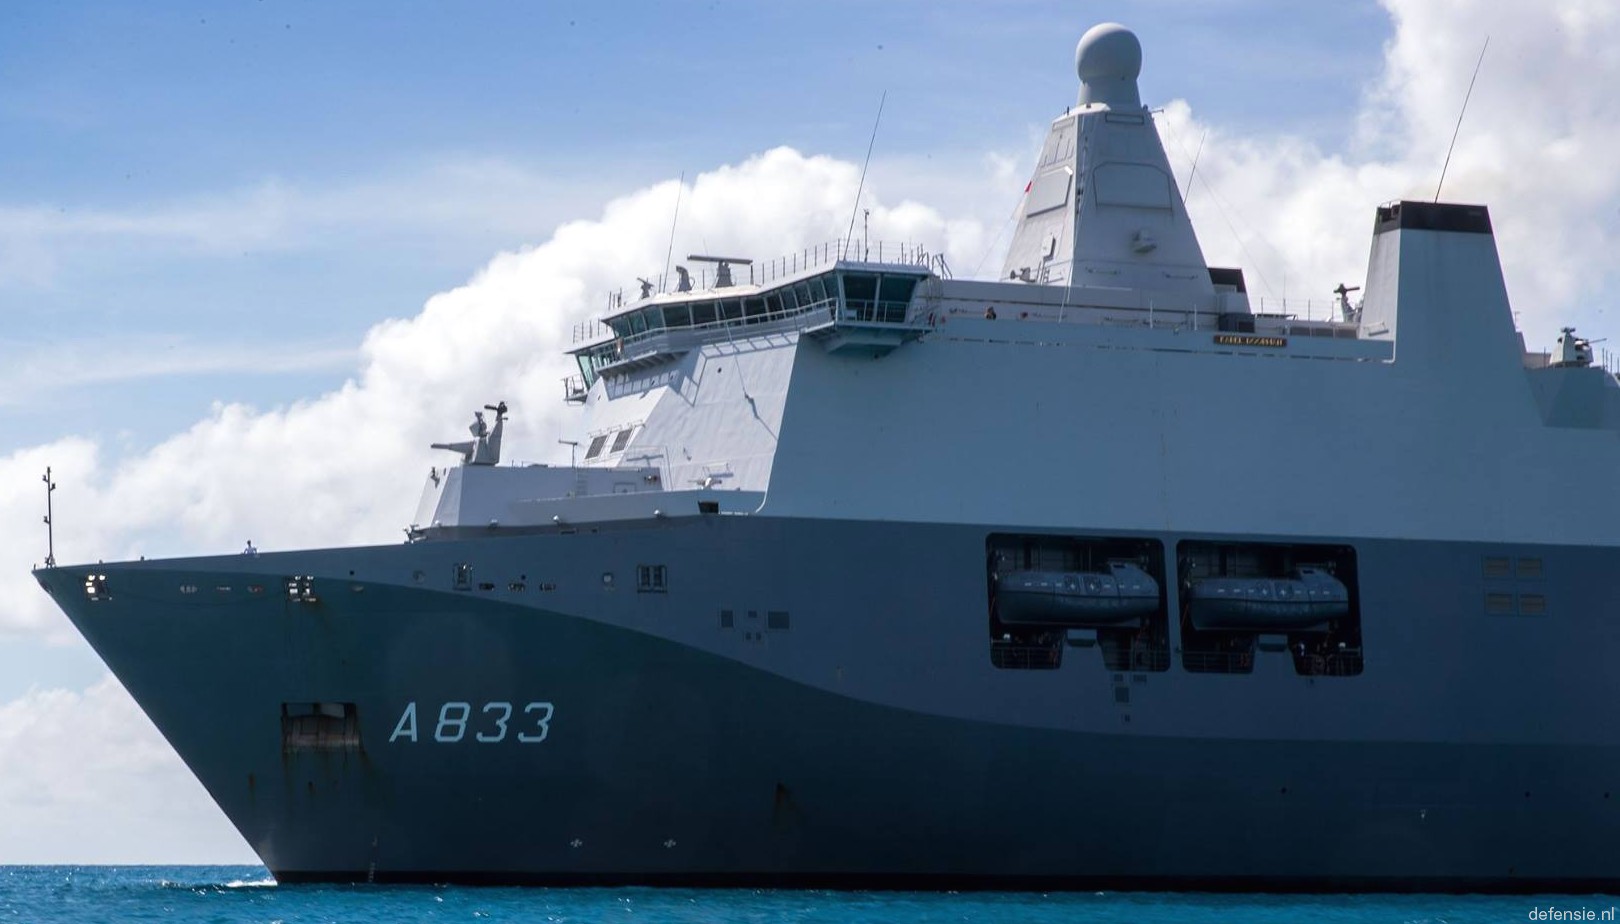 a-833 hnlms karel doorman joint support ship royal netherlands navy koninklijke marine 51